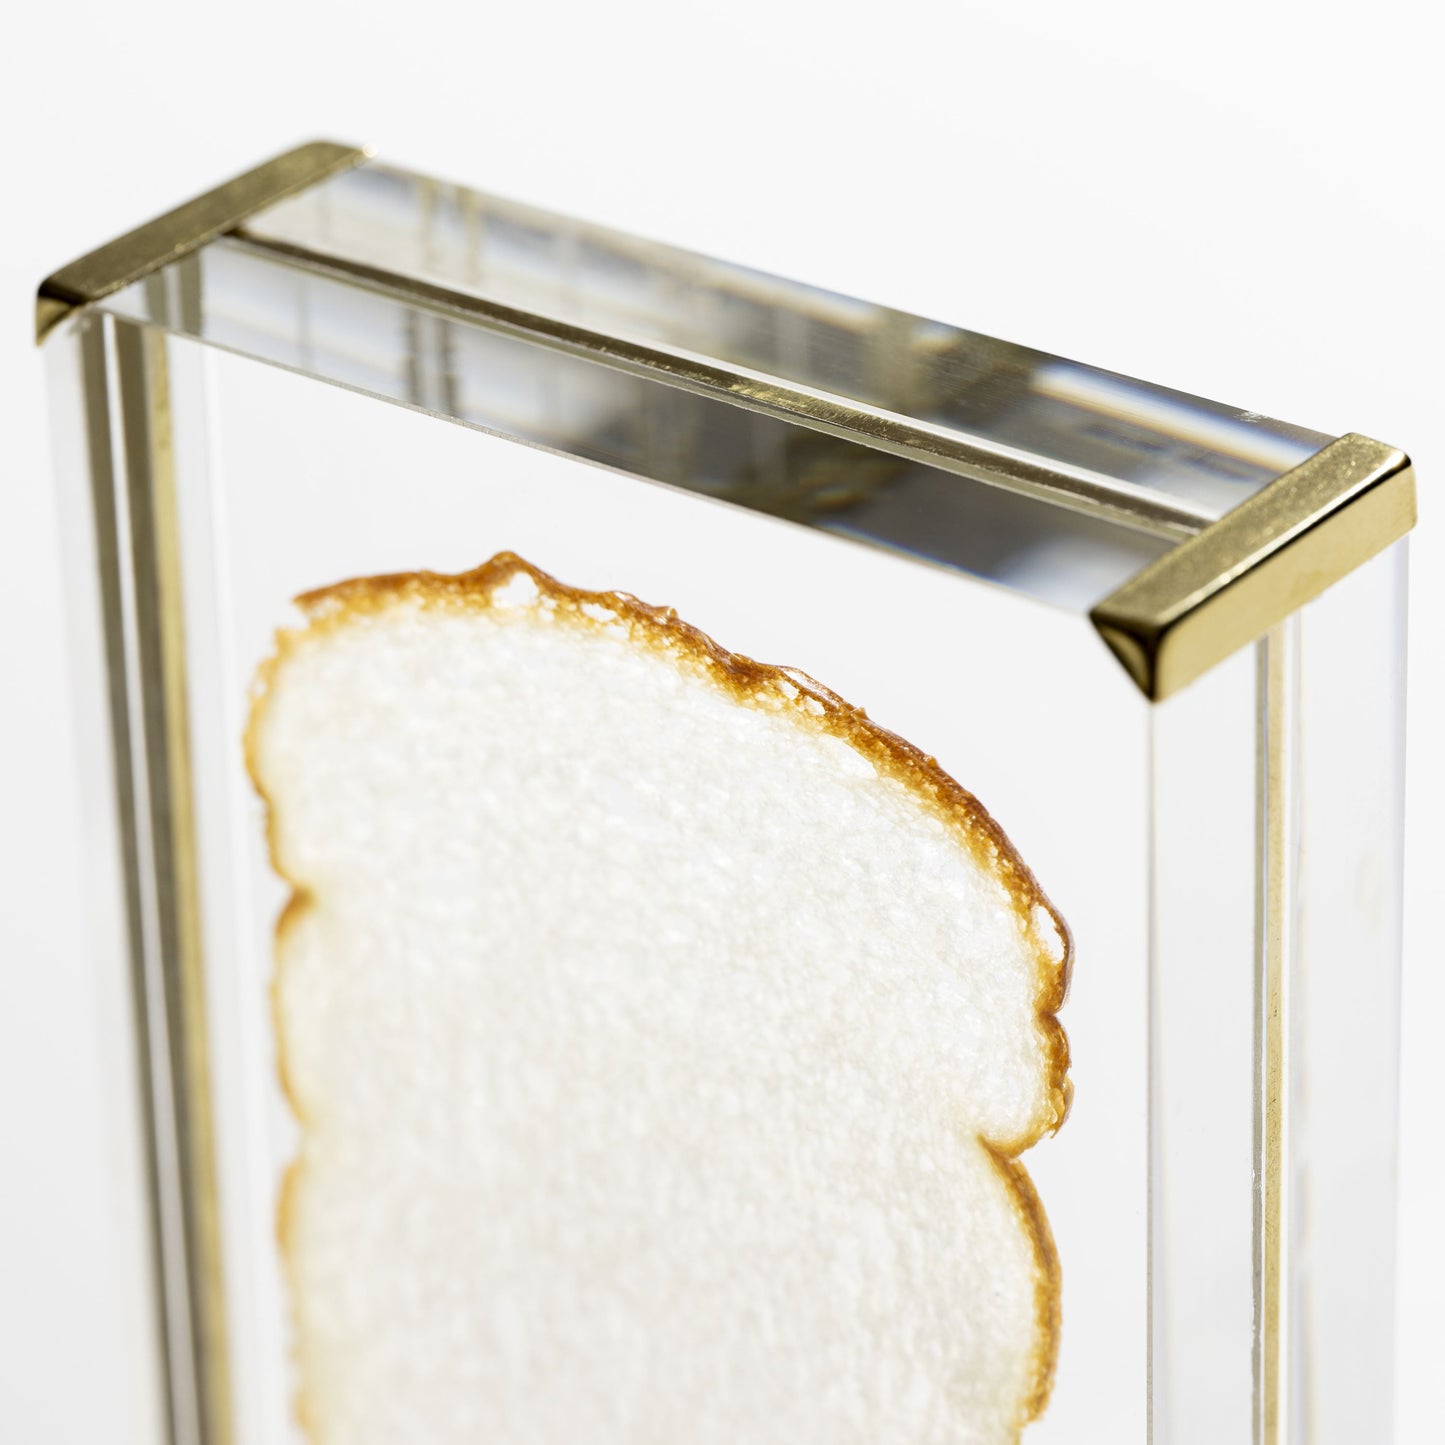 SLICED TOAST - Bread Object